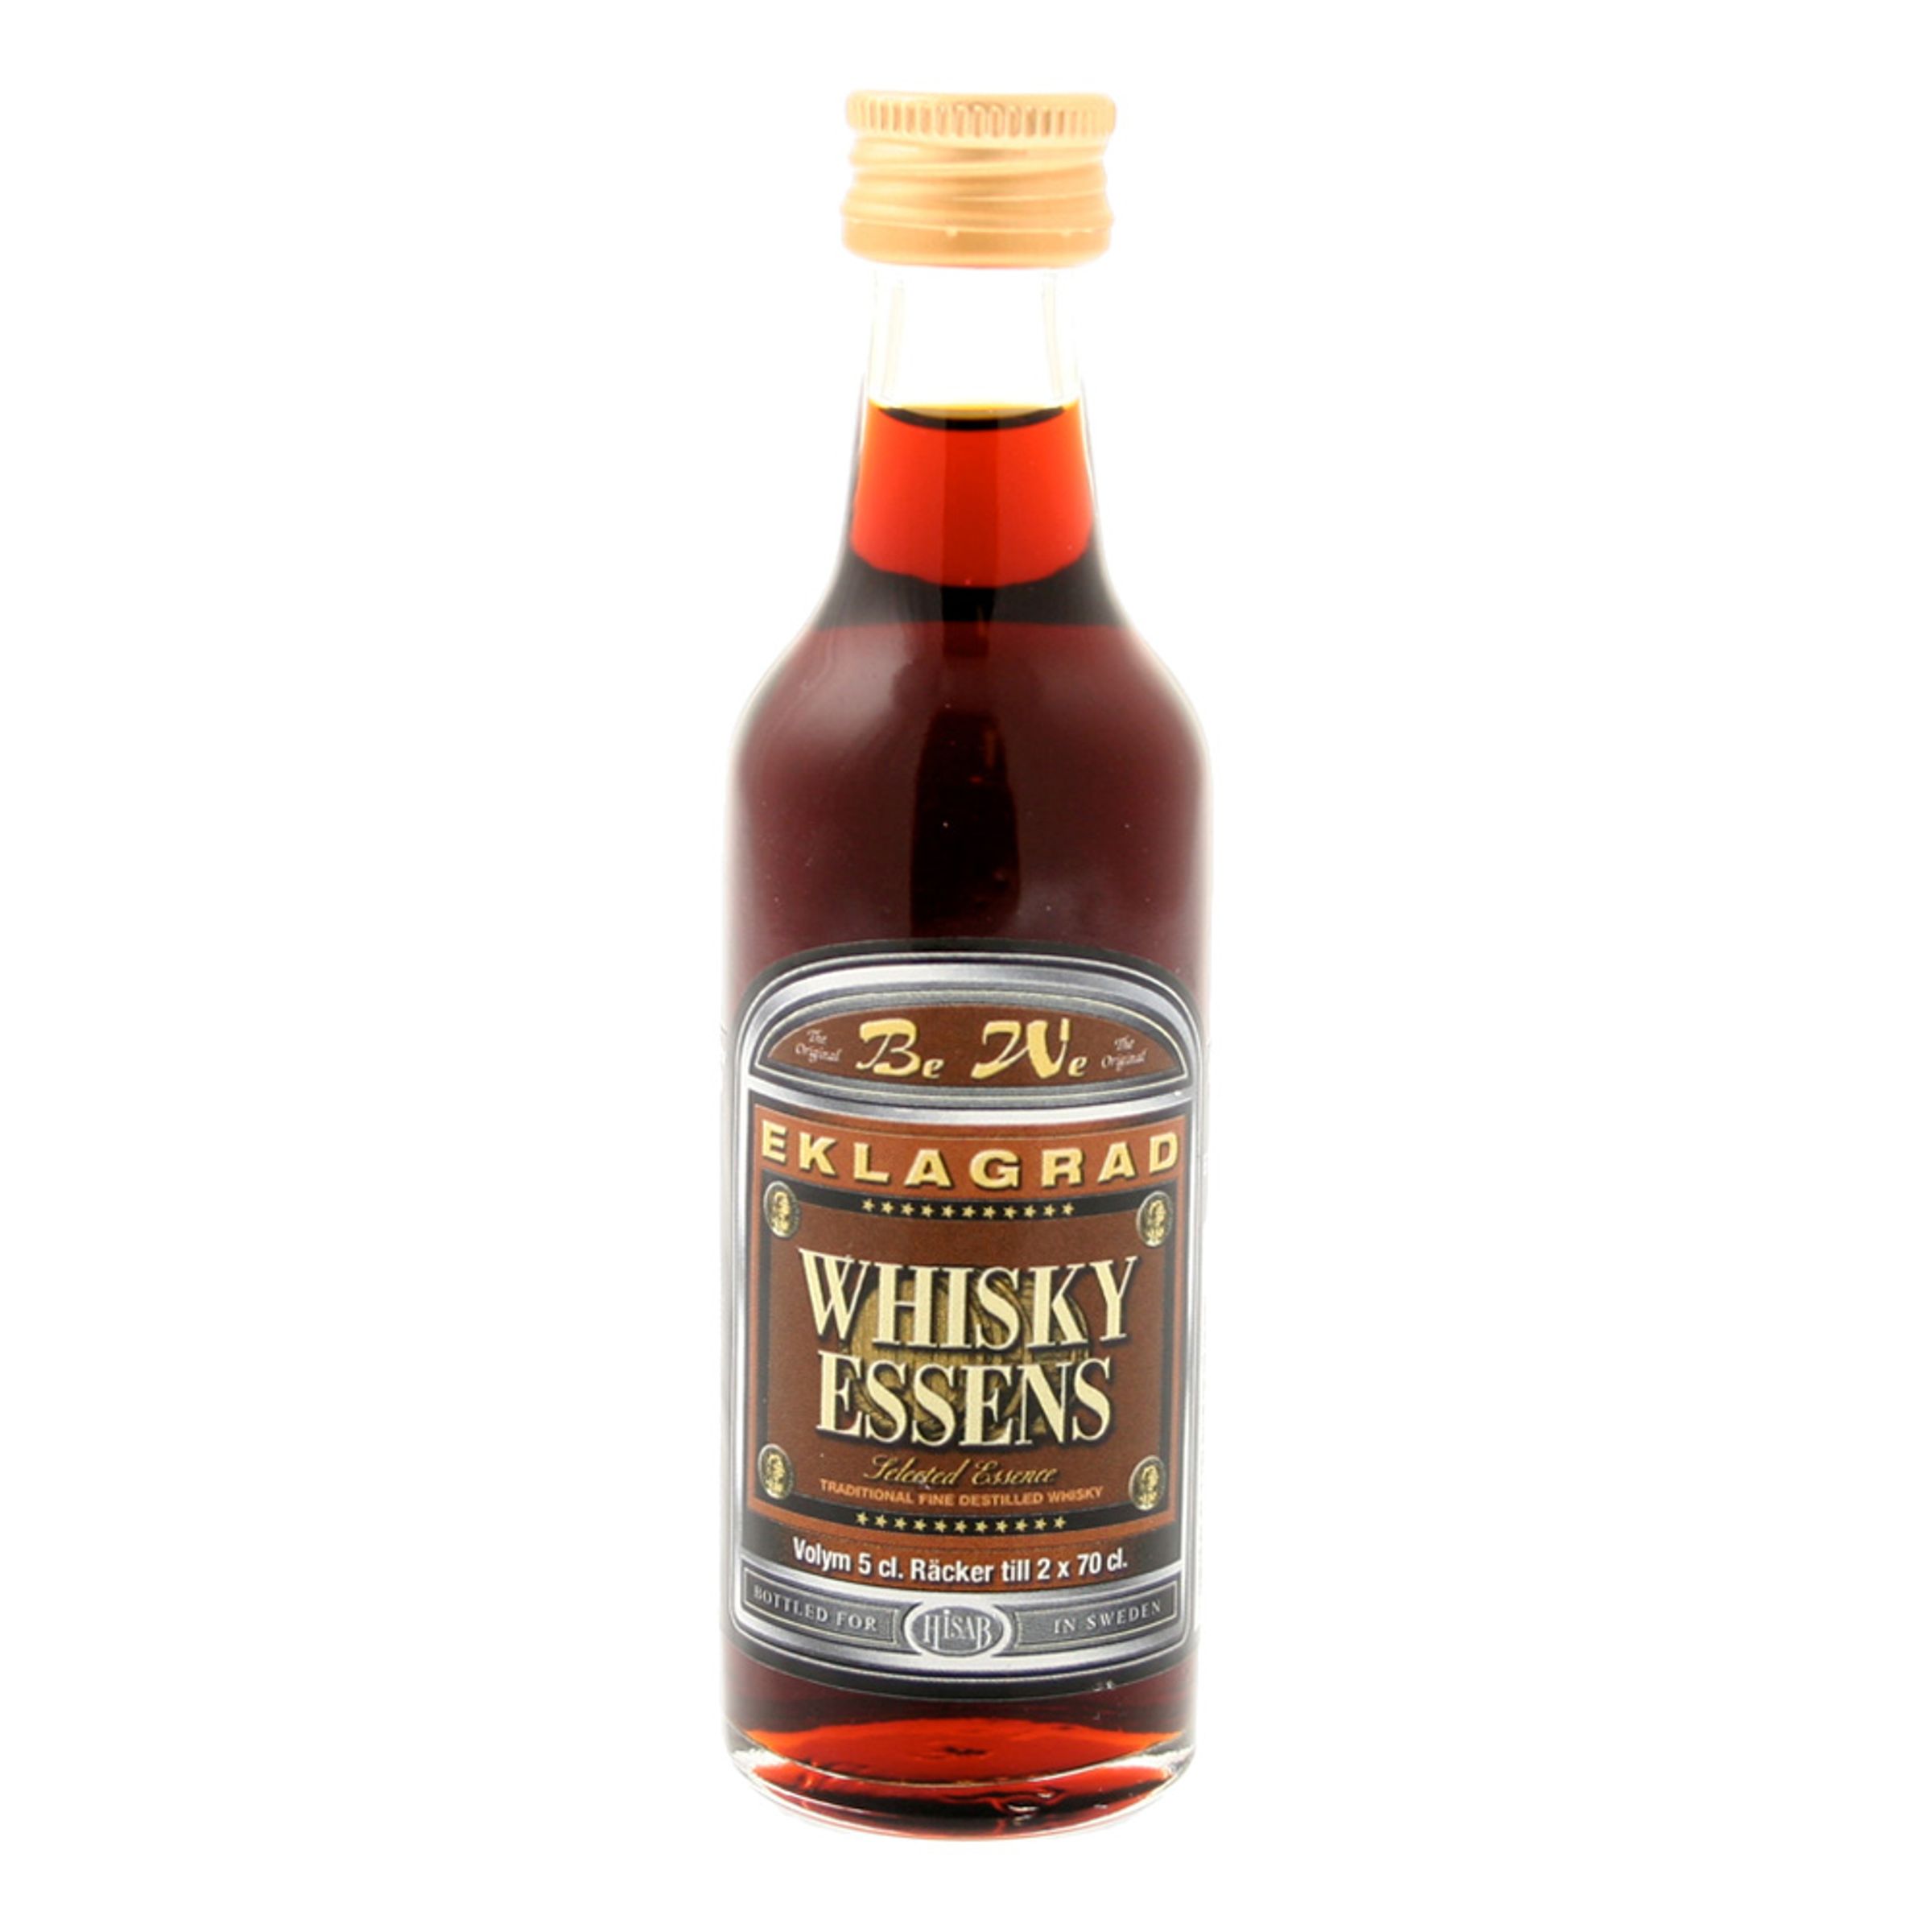 Eklagrad Whisky Essens - 5 cl